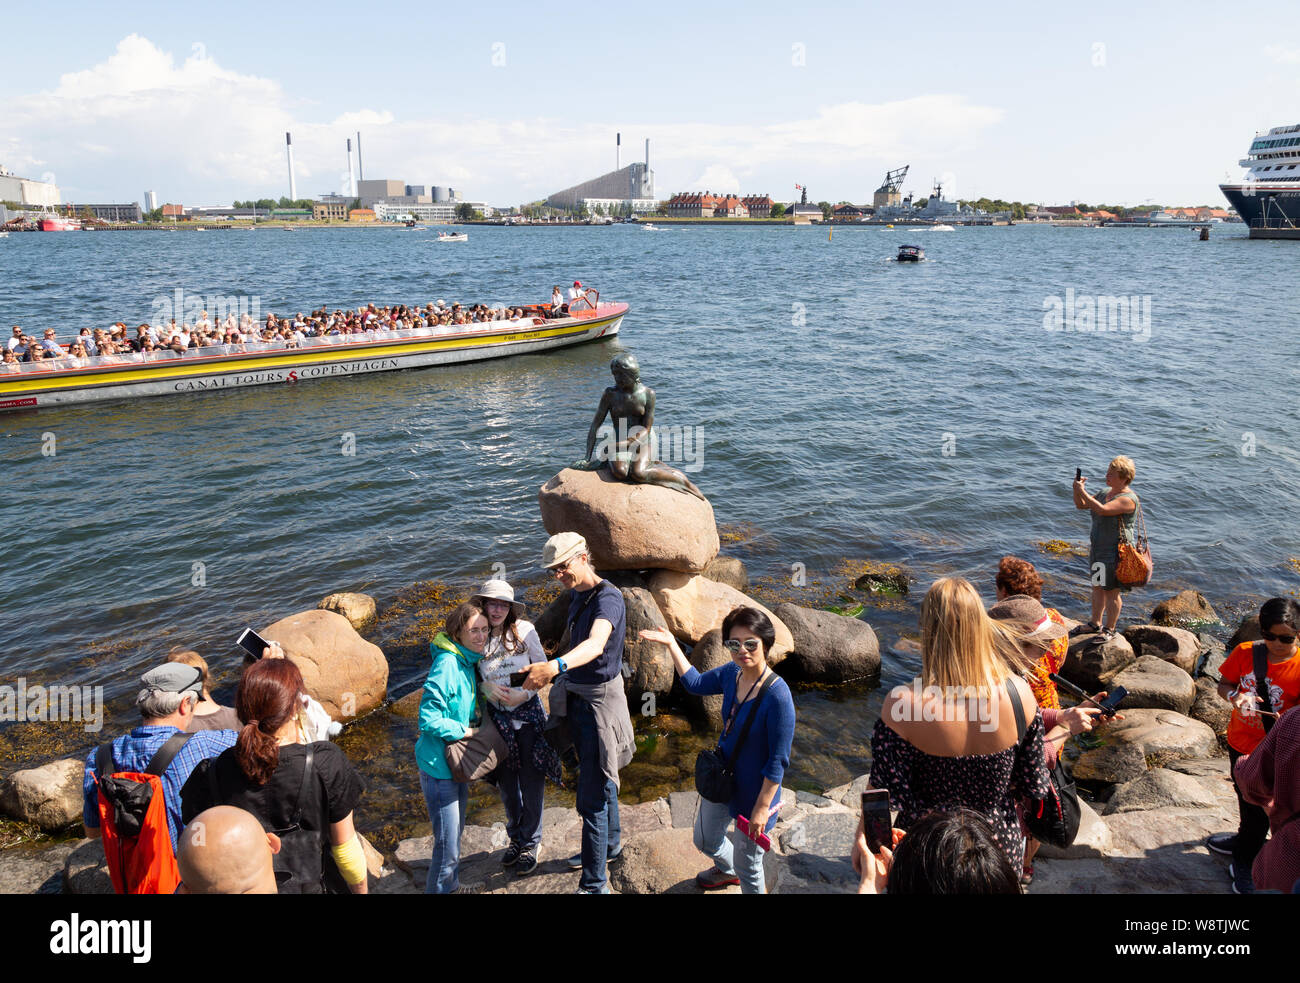 Copenhagen tourists - crowds of people looking at the famous statue of the Little Mermaid, Copenhagen Denmark Scandinavia Europe Stock Photo